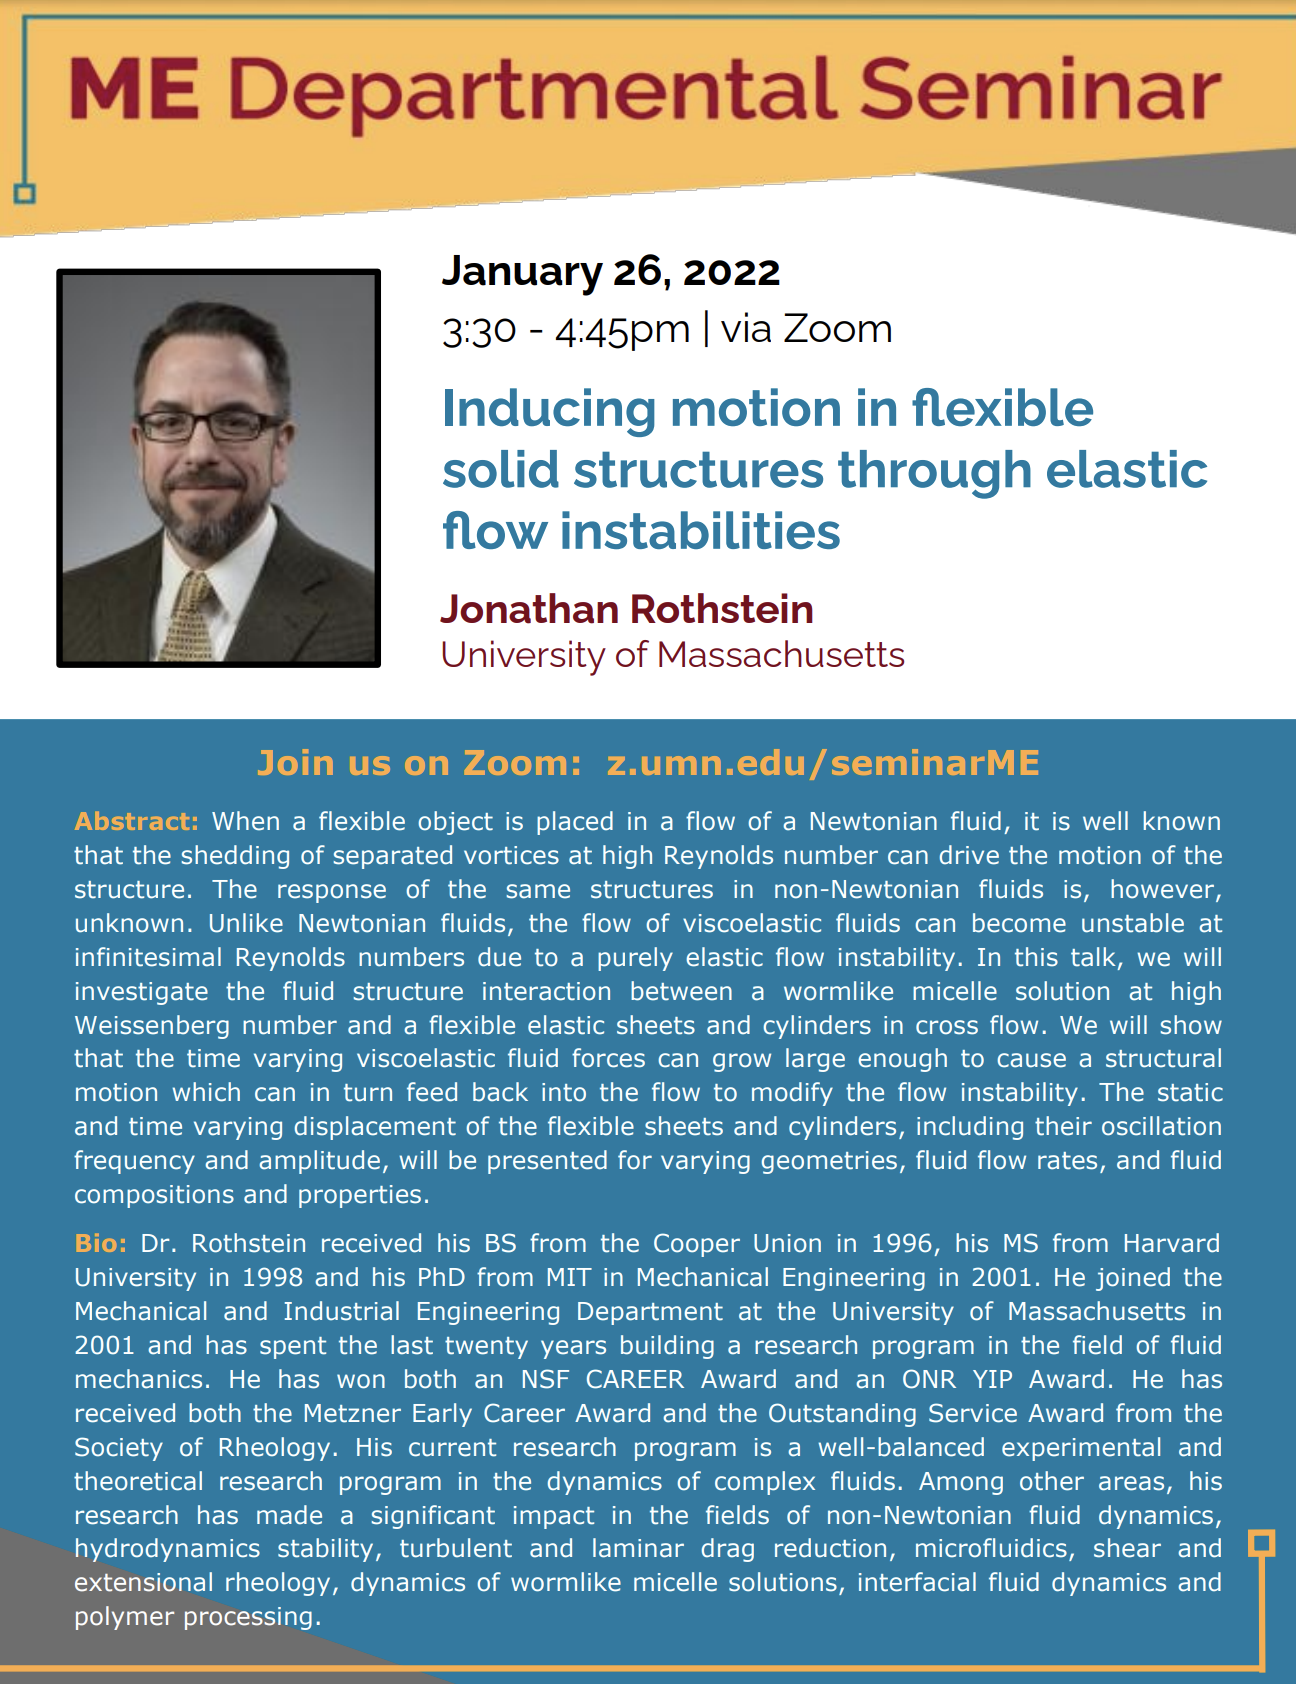 Jonathan Rothstein Departmental Seminar Flyer